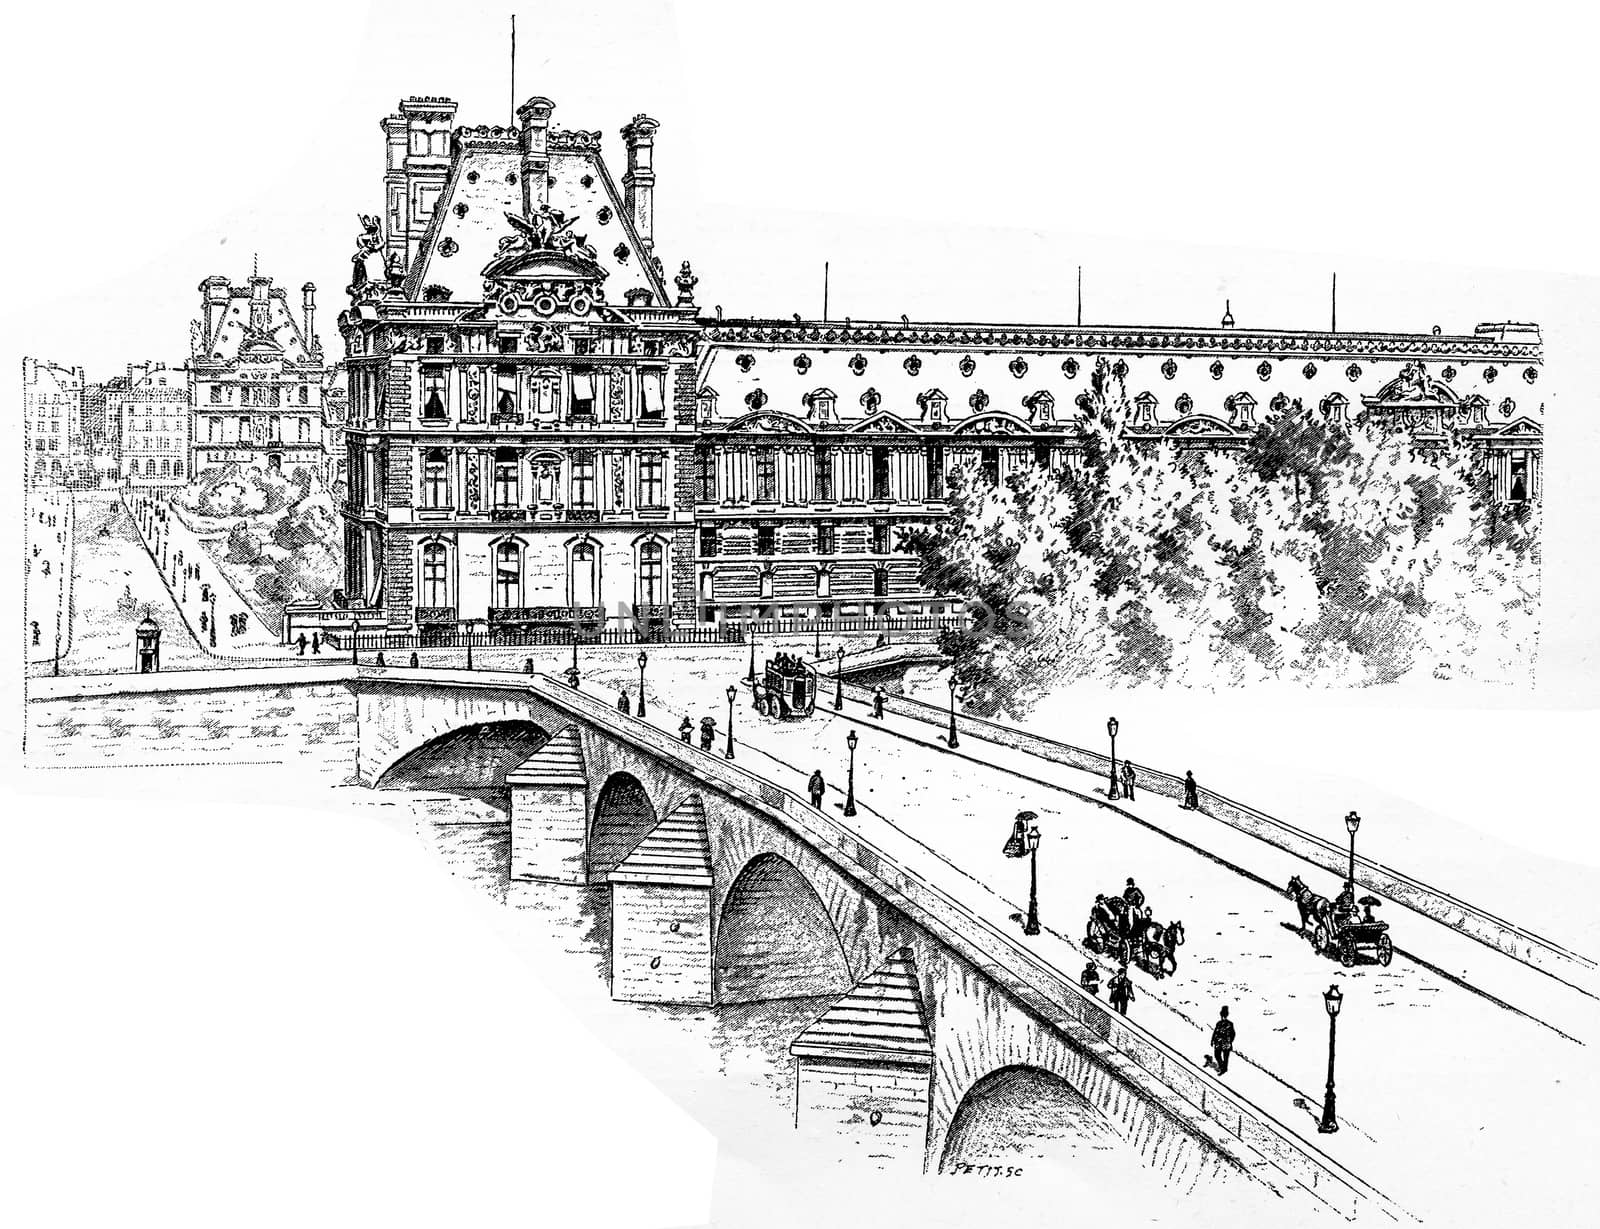 The Pavillon de Marsan, the Pavillon de Flore and the Pont Royal by Morphart